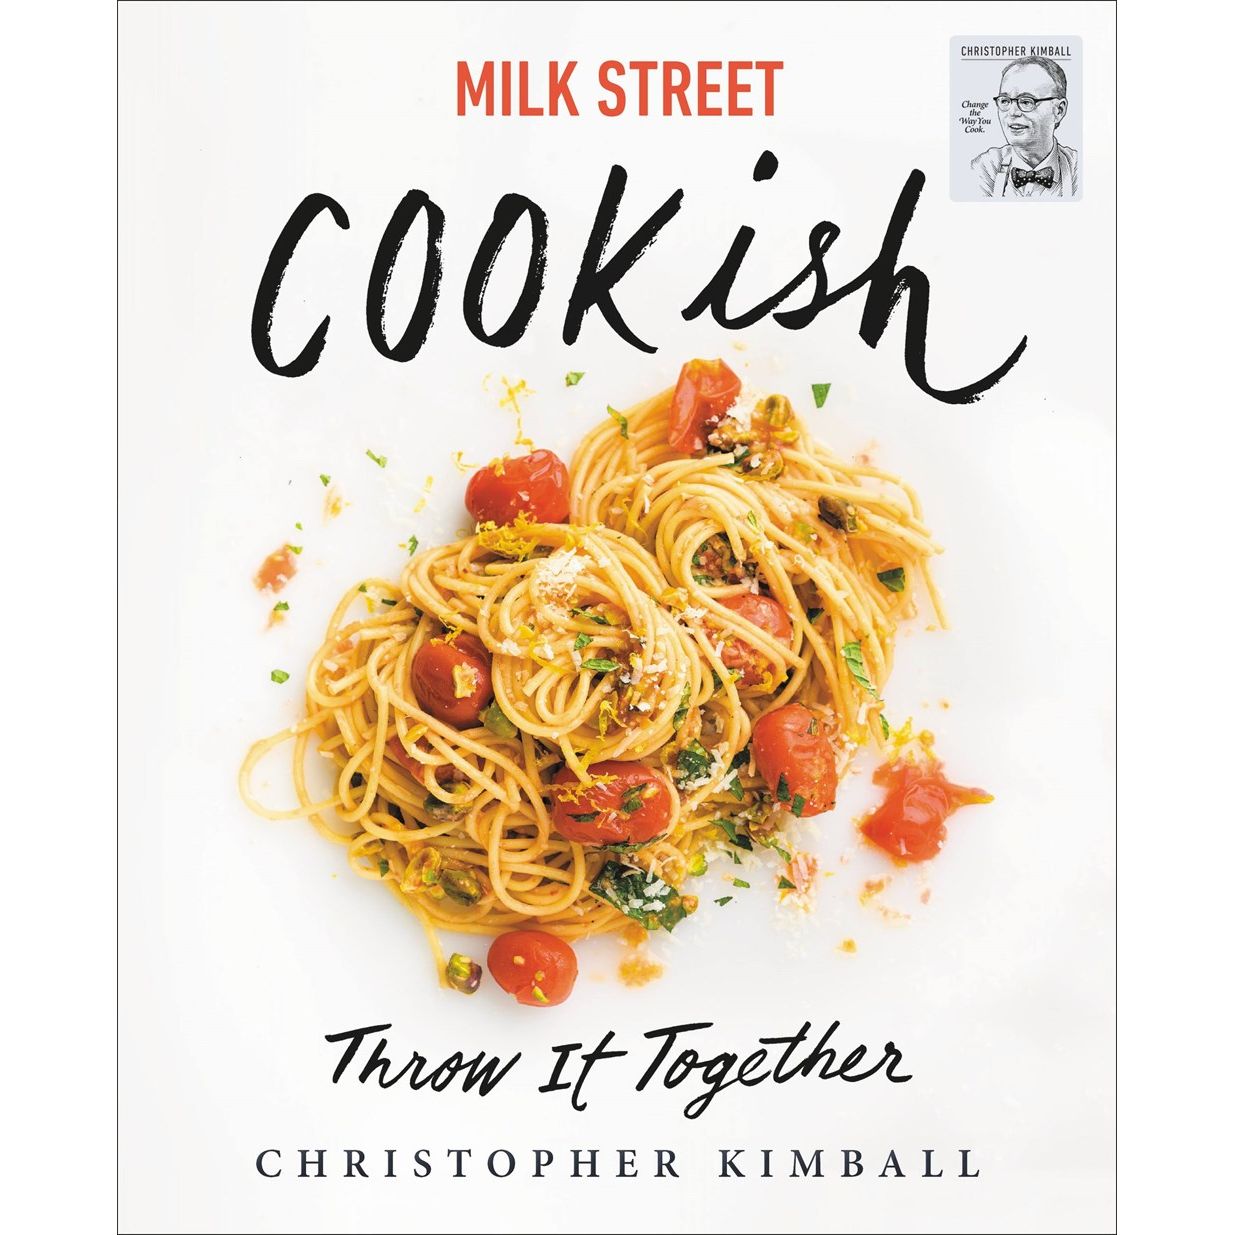 Milk Street Cookish (Christopher Kimball)